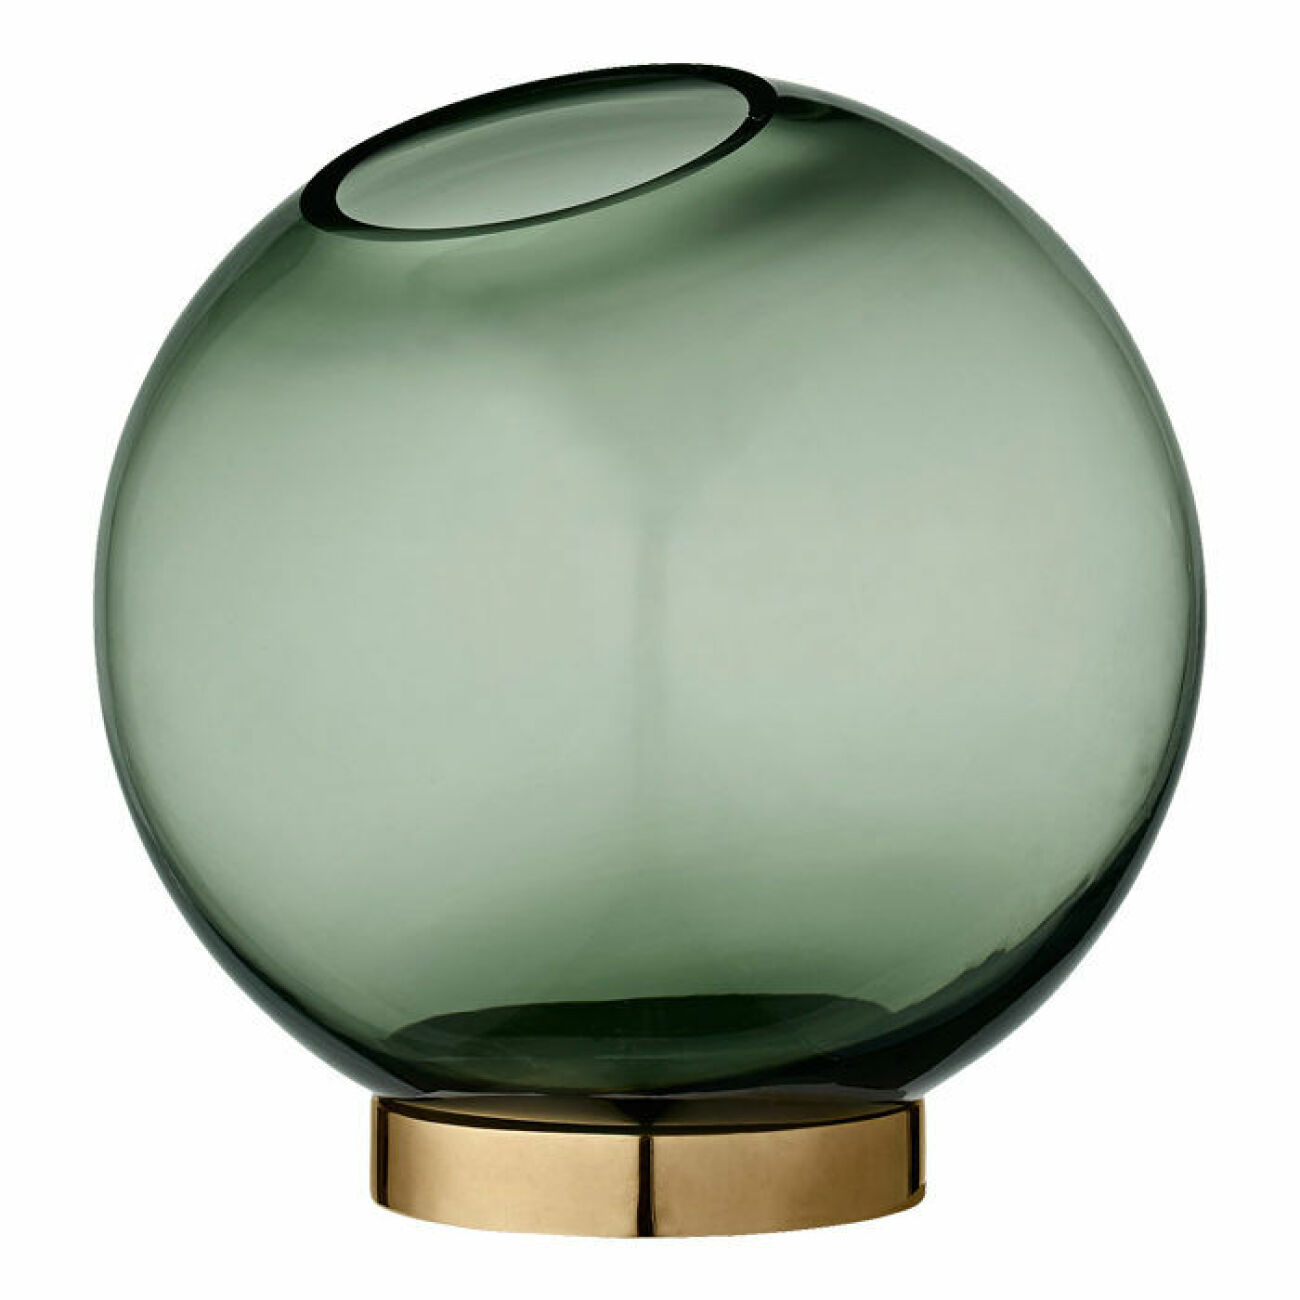 Globe vas i grönt glas från AYTM